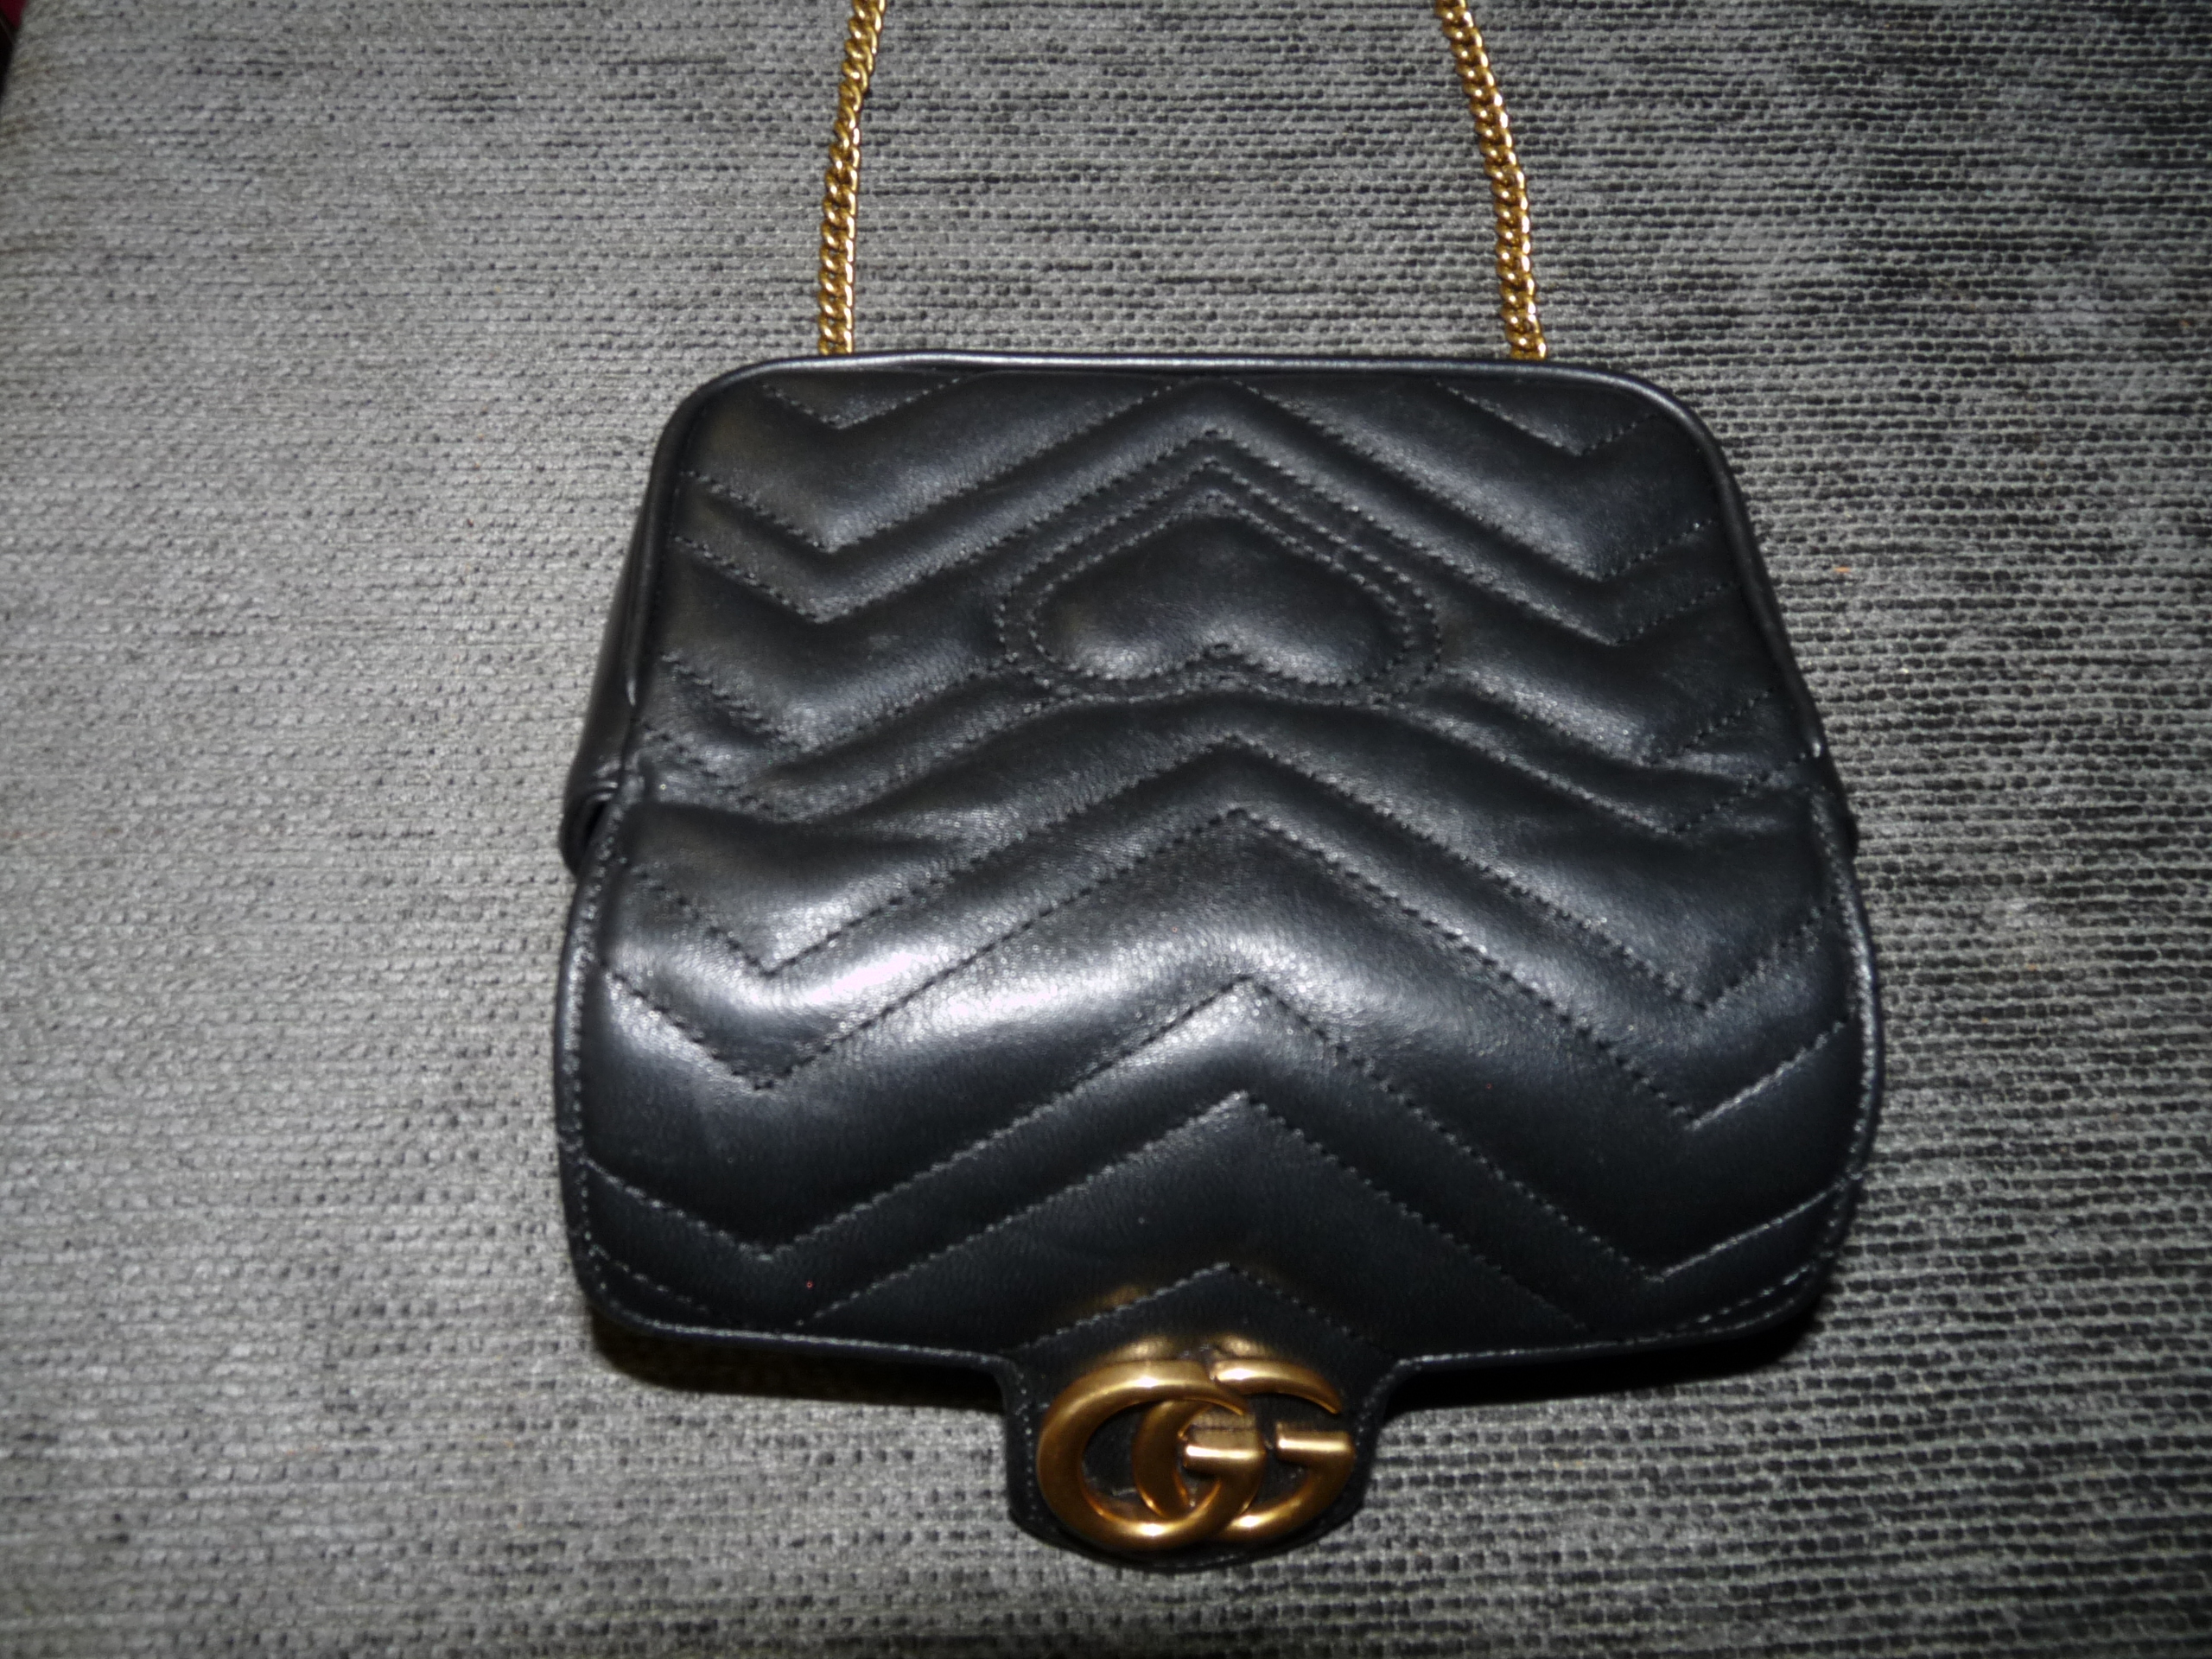 Gucci Marmont Super mini bag in Black Calf skin leather H 4" x 6.5" x d 1.75" Pre owned grade A- - Image 3 of 7